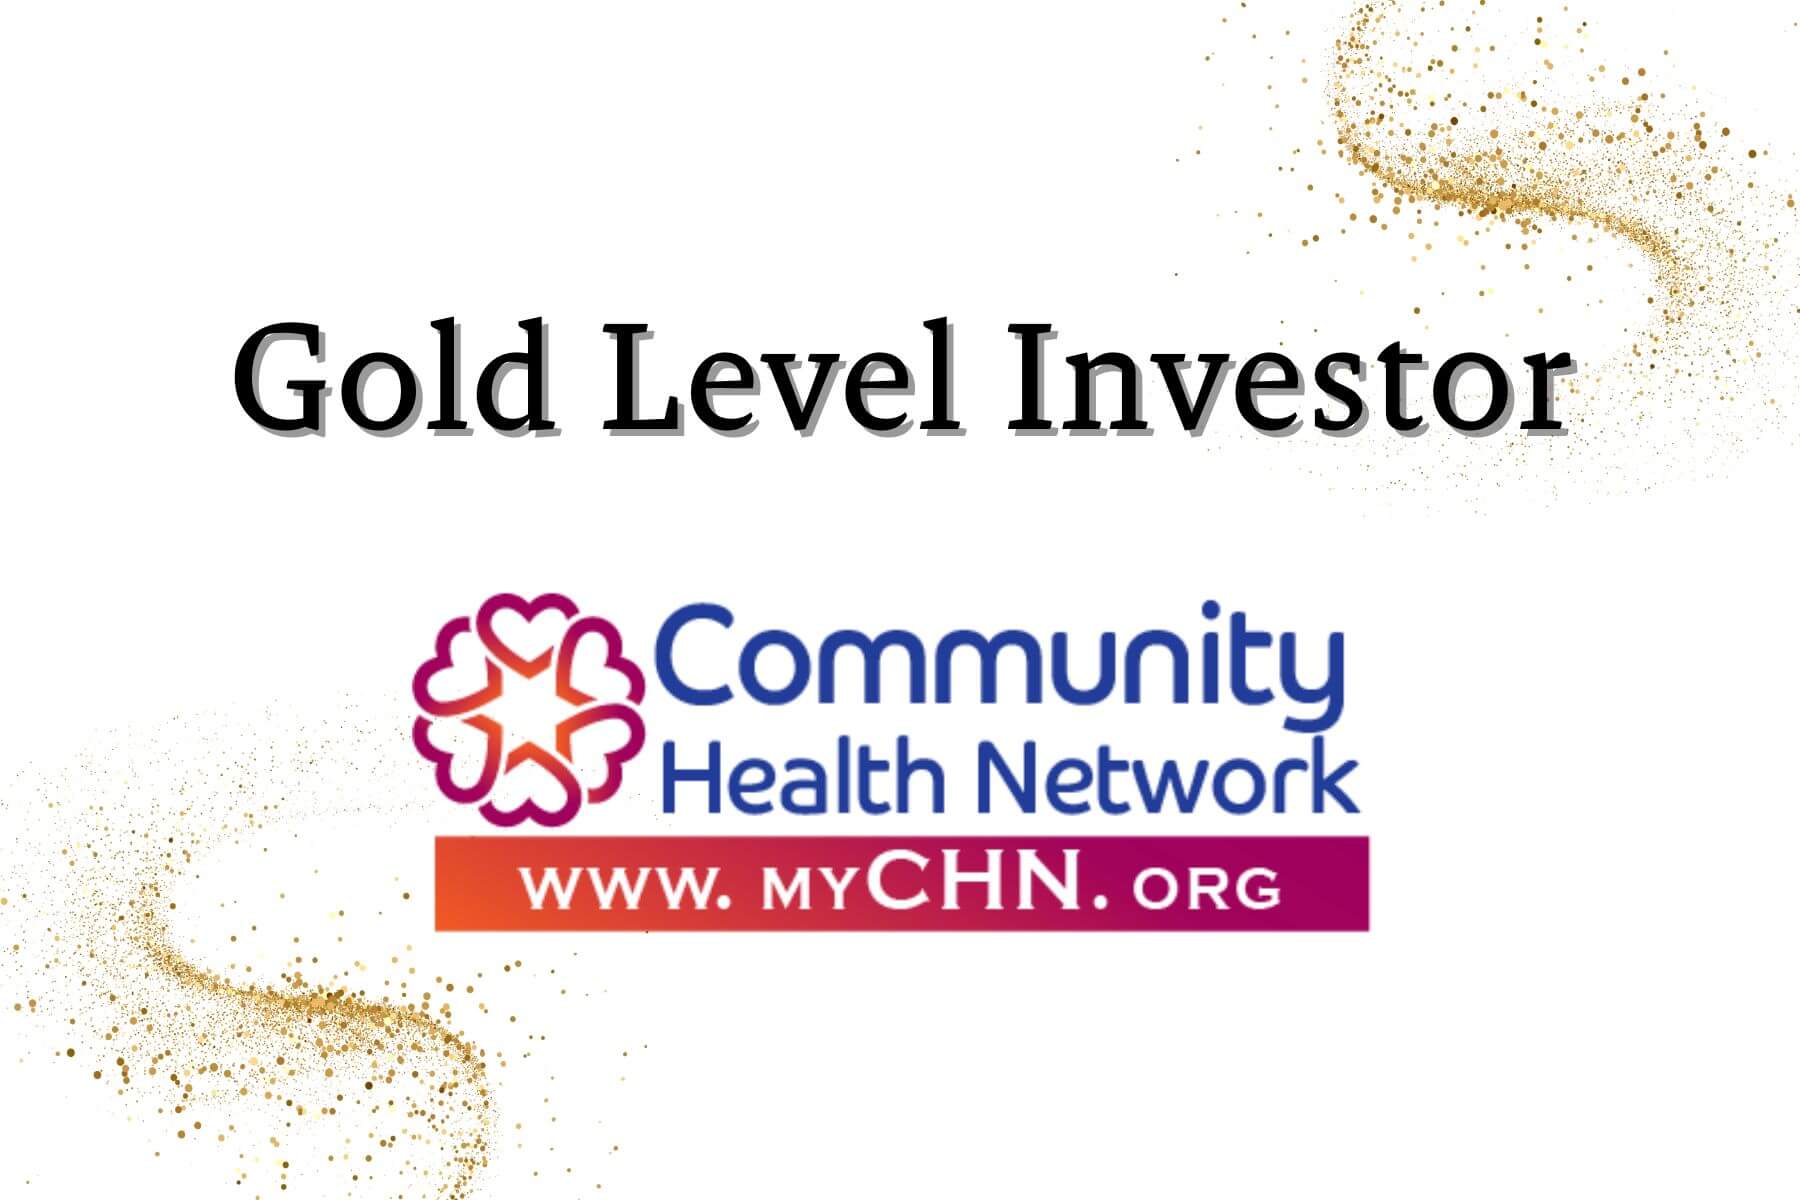 Community Health Network Gold Level Investor